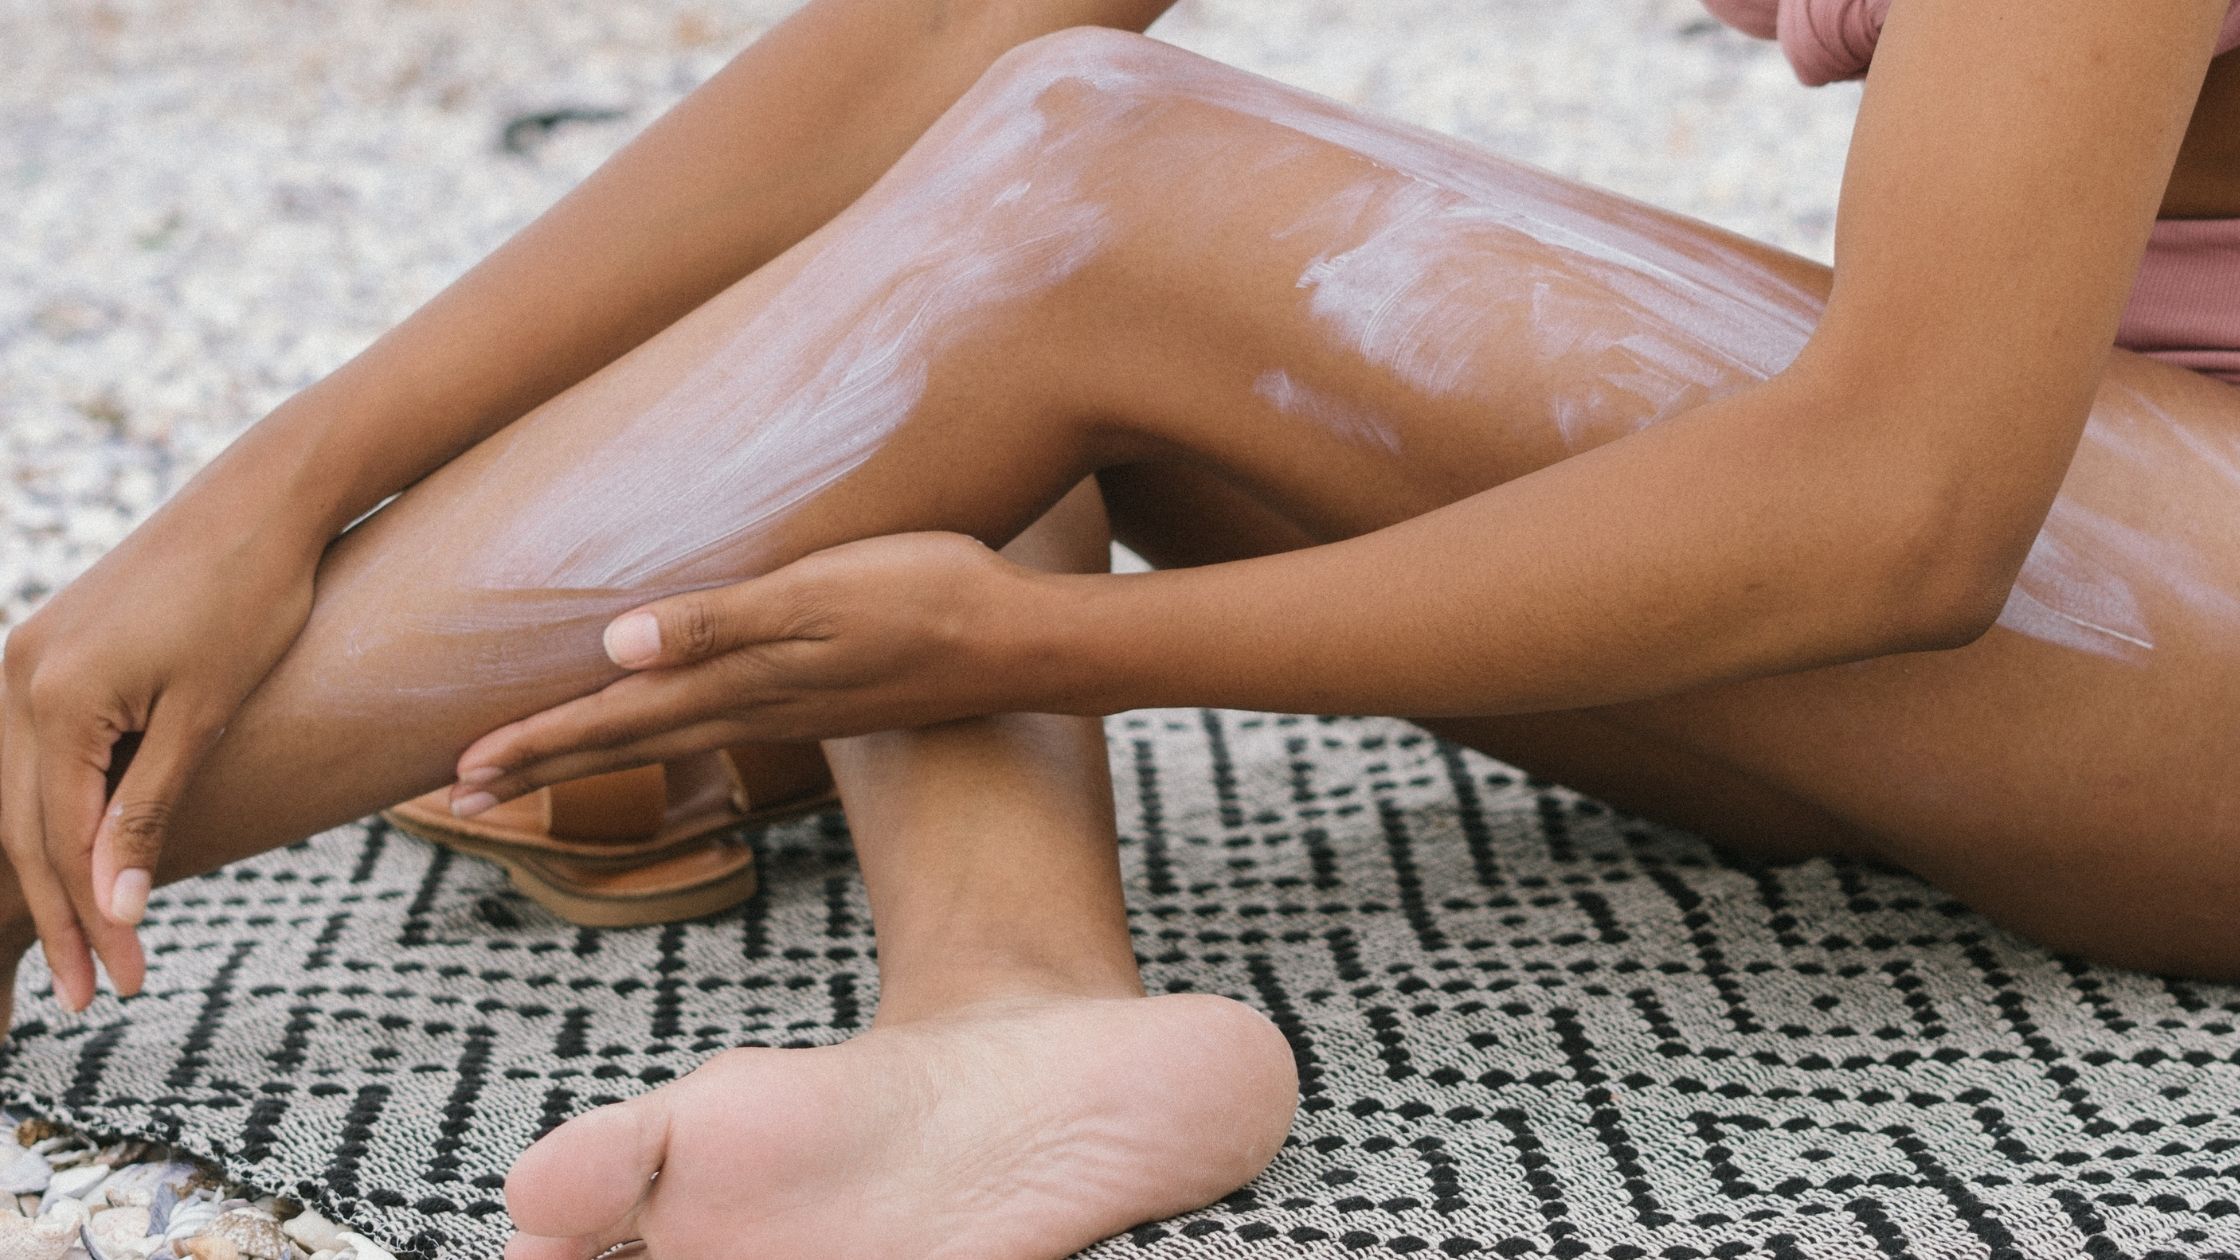 Woman applying sunscreen on beach towel